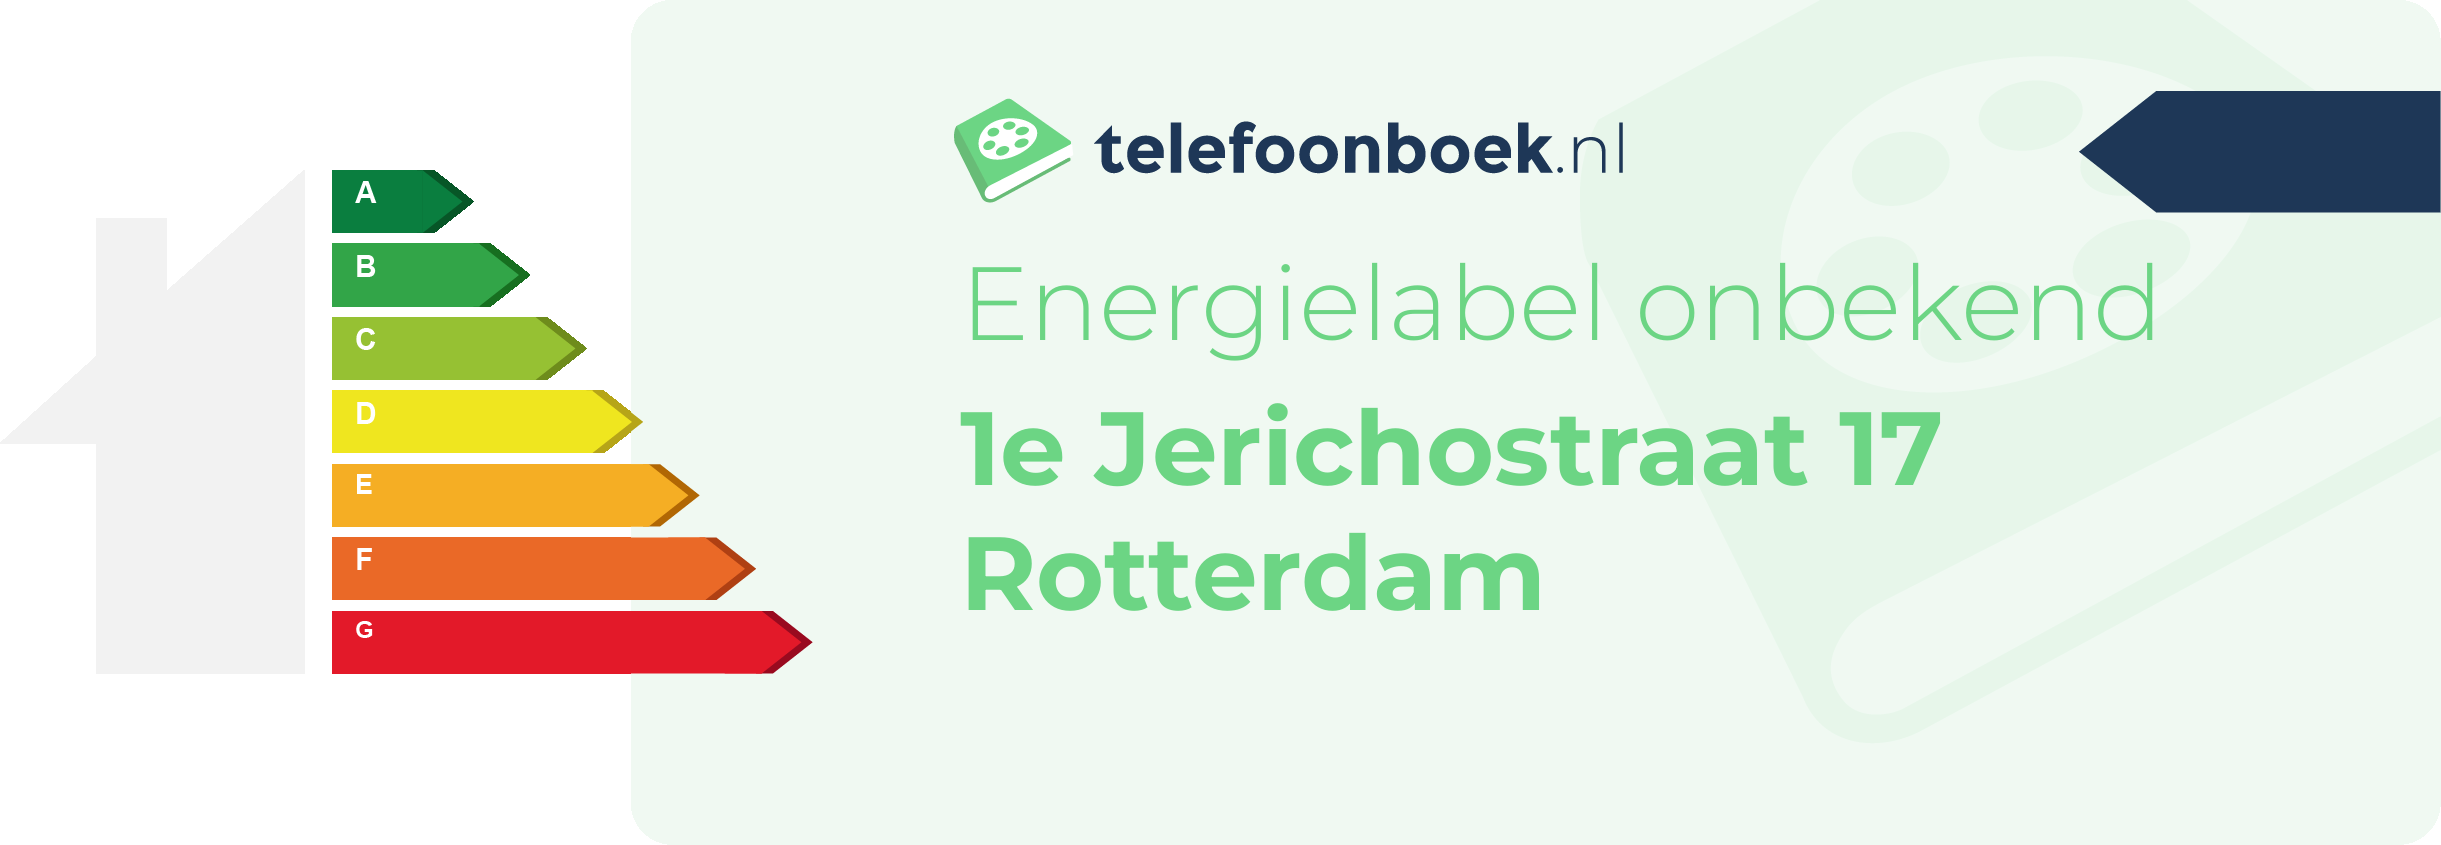 Energielabel 1e Jerichostraat 17 Rotterdam